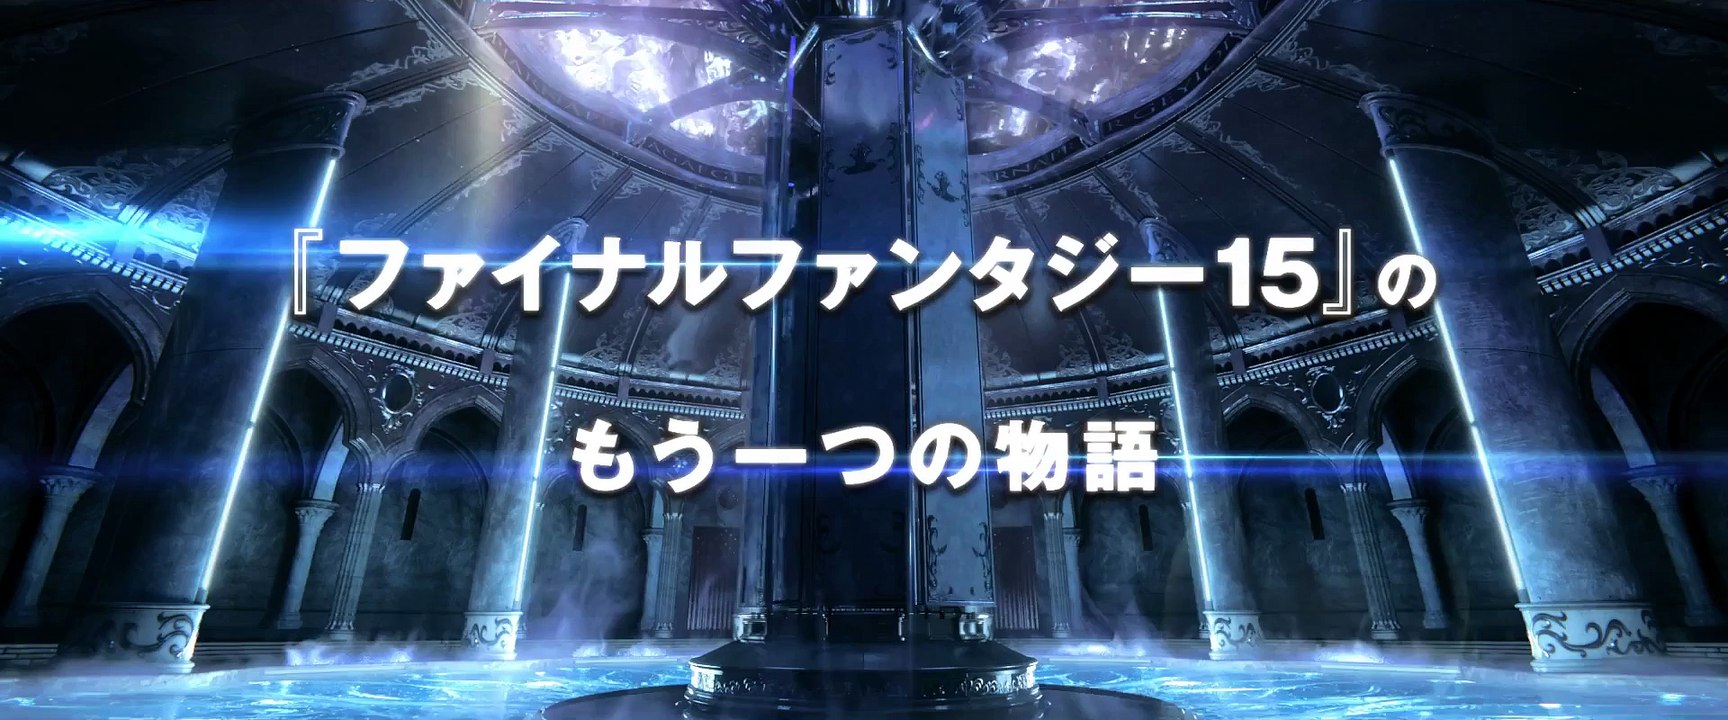 Kingsglaive: Final Fantasy XV - Trailer (Deutsche UT) HD